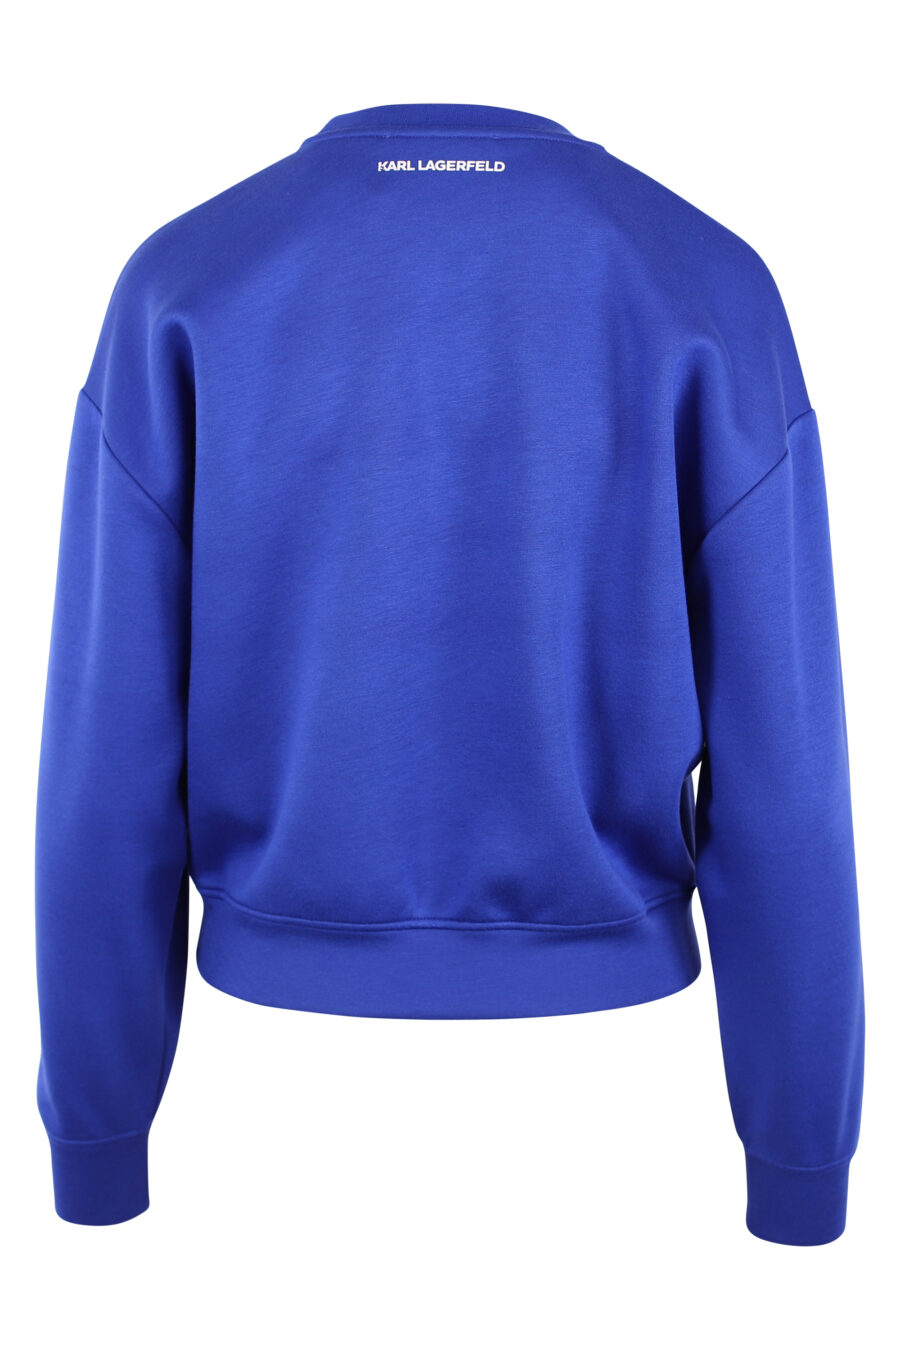 Blue sweatshirt with cross ribbon logo - IMG 6149